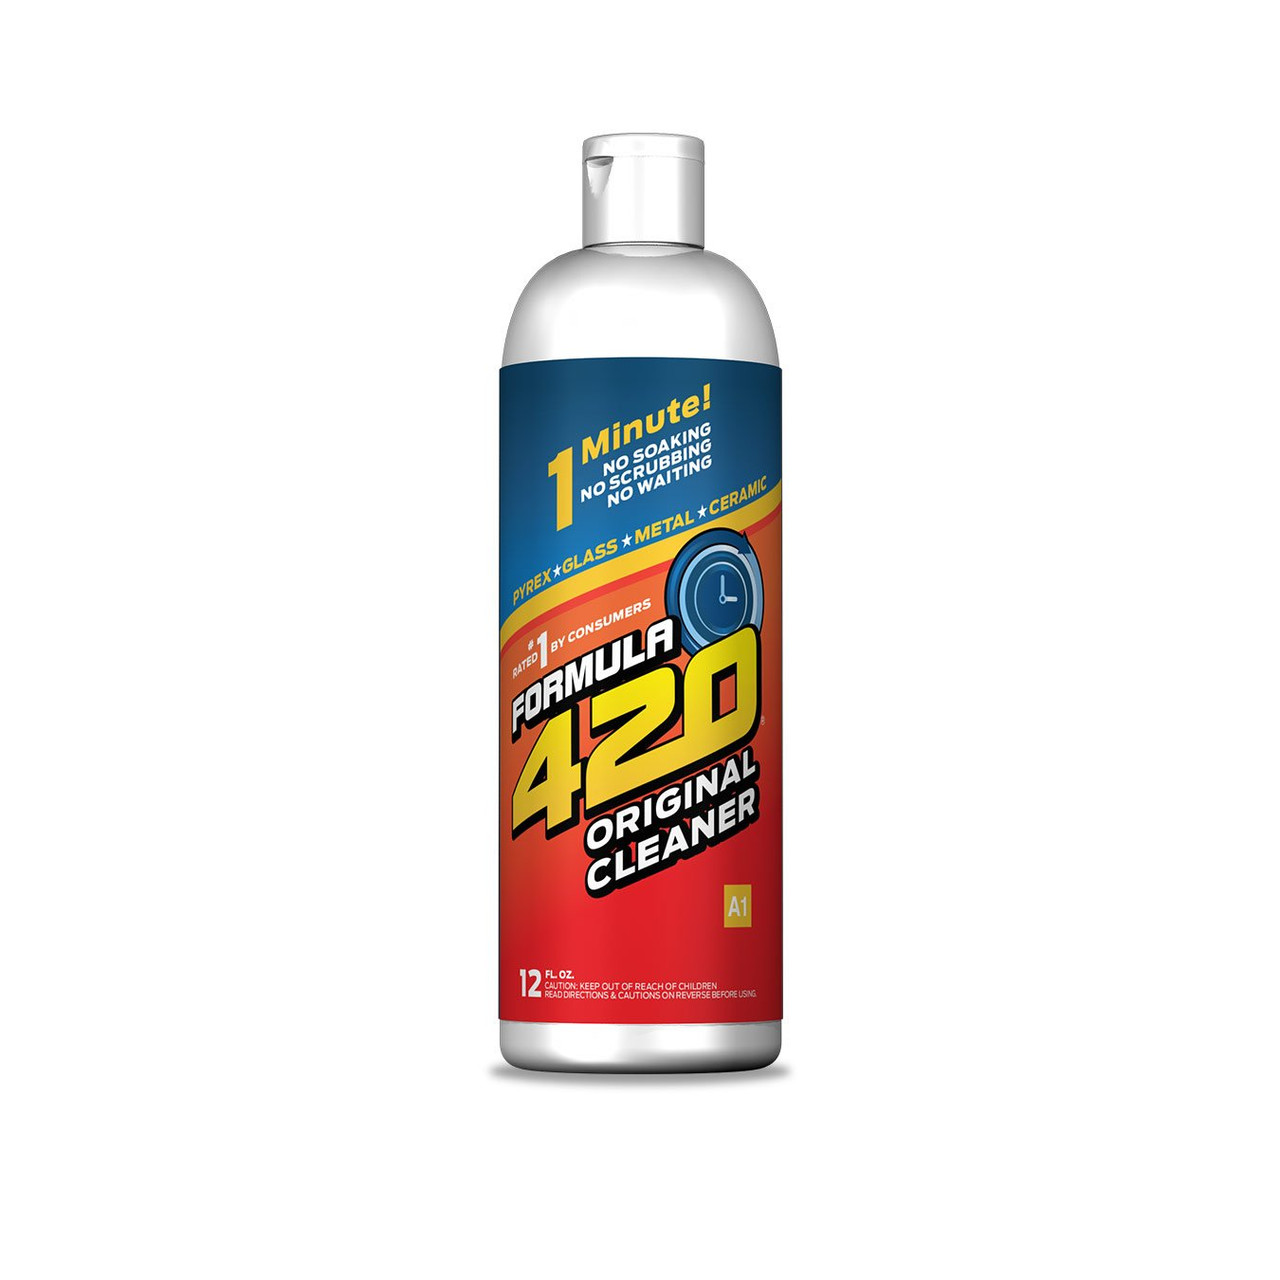 A1 - Formula 420 Original Cleaner / C1 - Formula 710 Advanced Cleaner